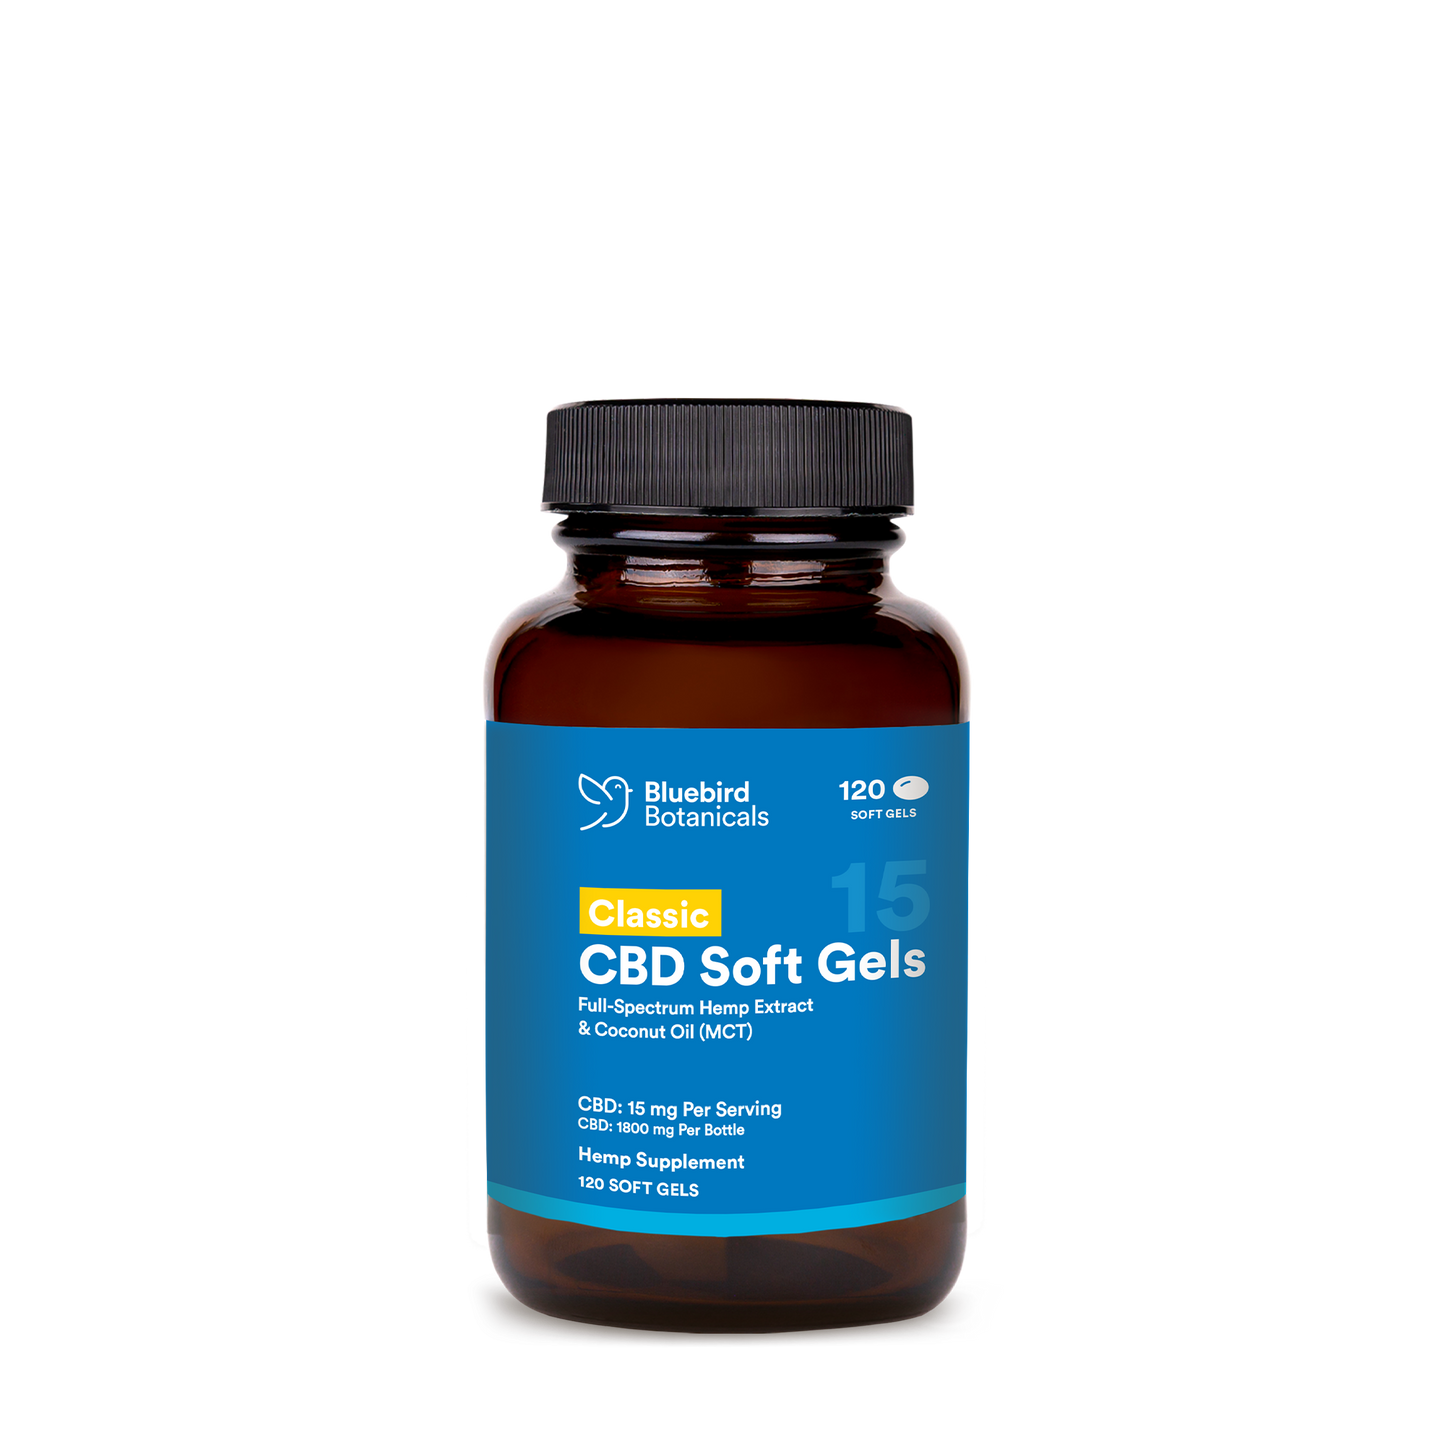 Classic CBD Oil Soft Gels Concentrated CBD Capsules Bluebird Botanicals 120 count - $89.95  